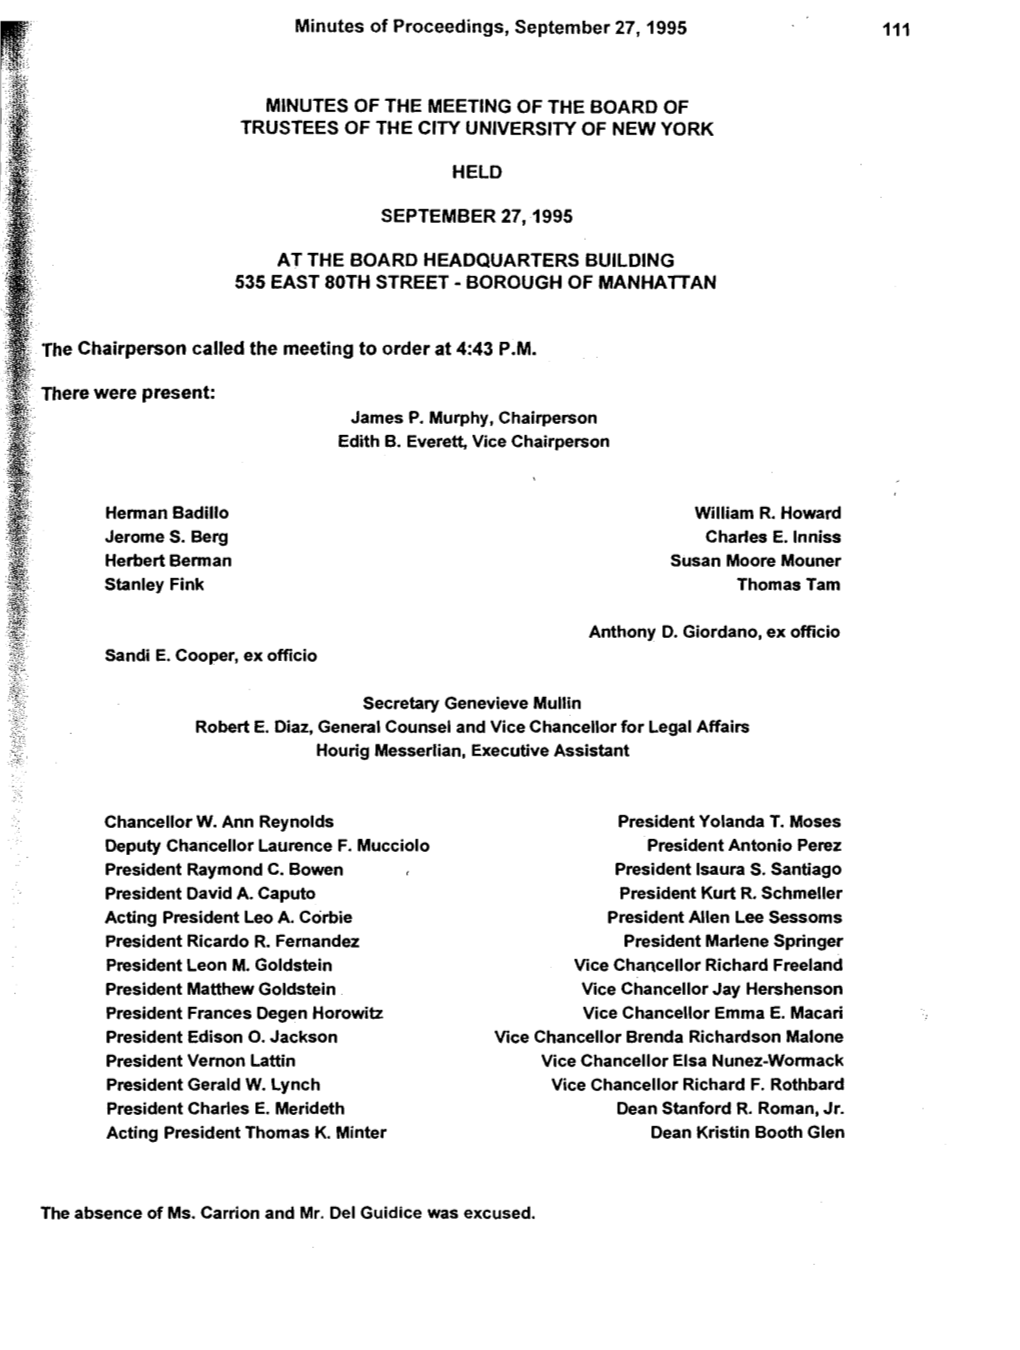 Board Meeting Minutes September 27, 1995